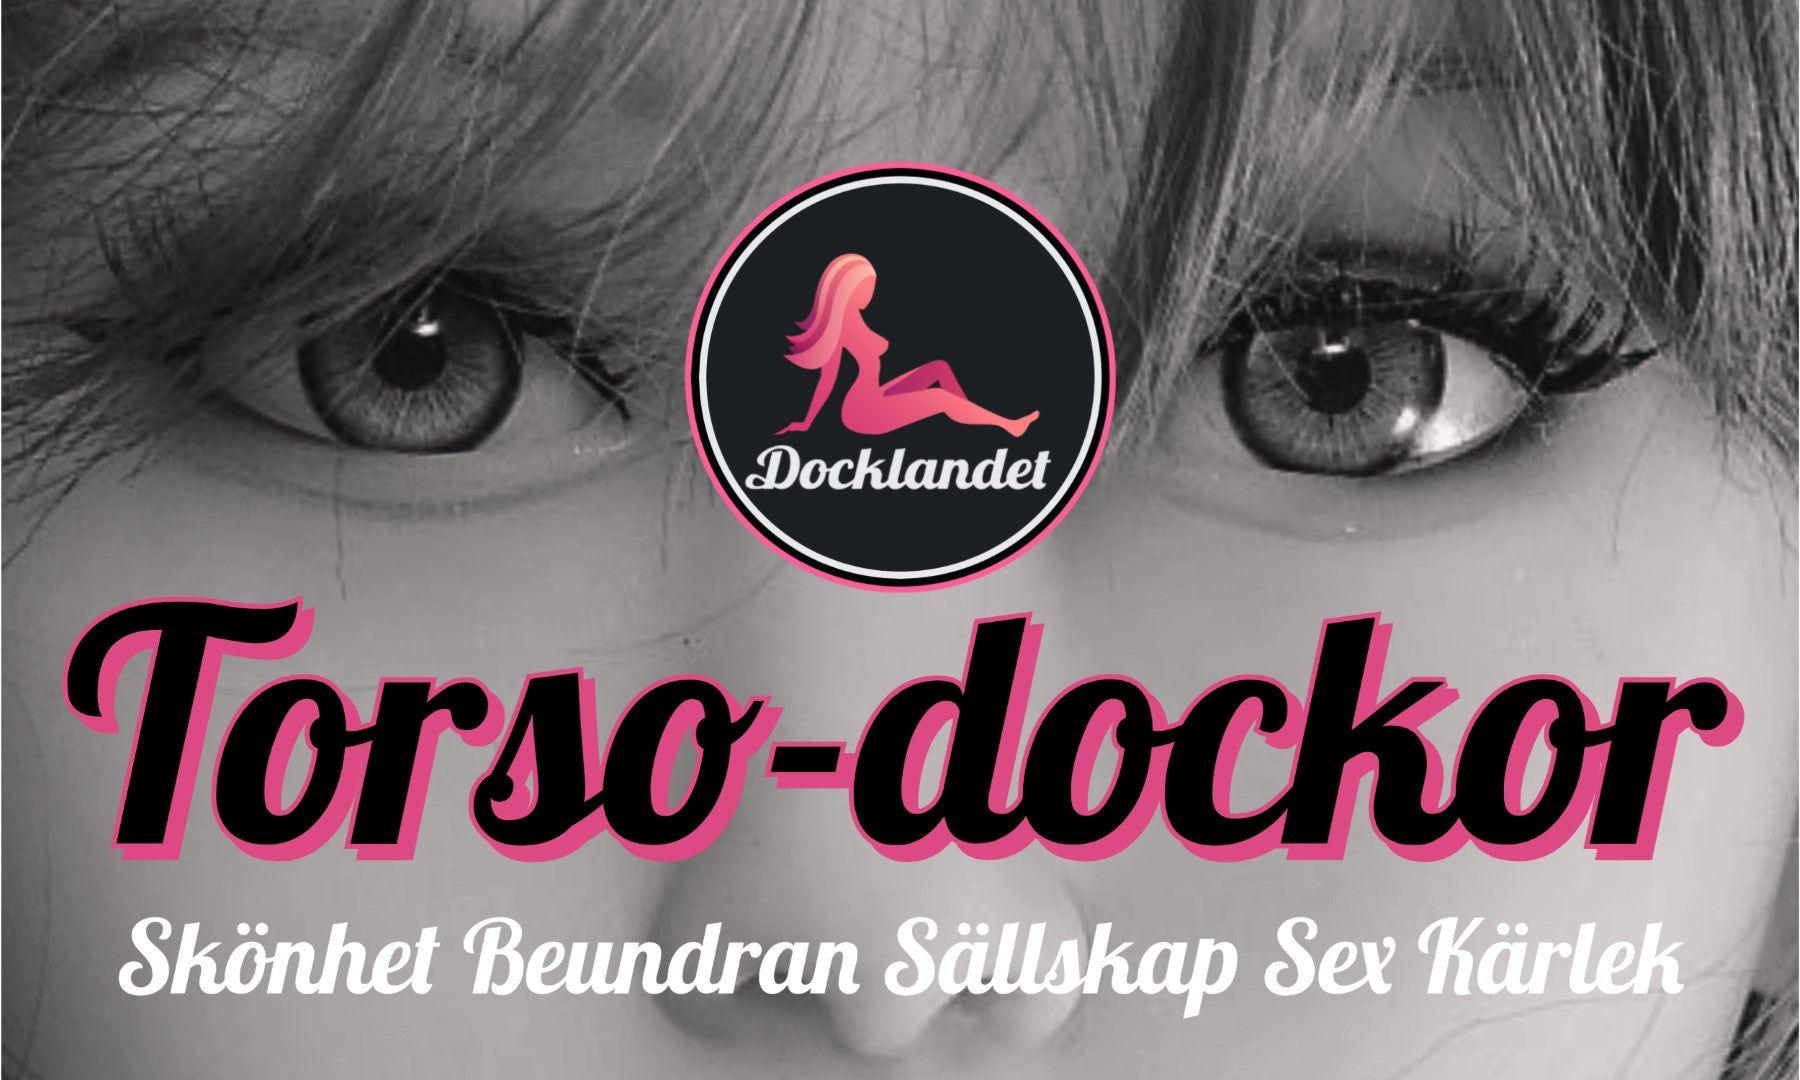 Torso sex dolls at Docklandet. We have several torso sex dolls in stock and many other nice sex dolls! Welcome!